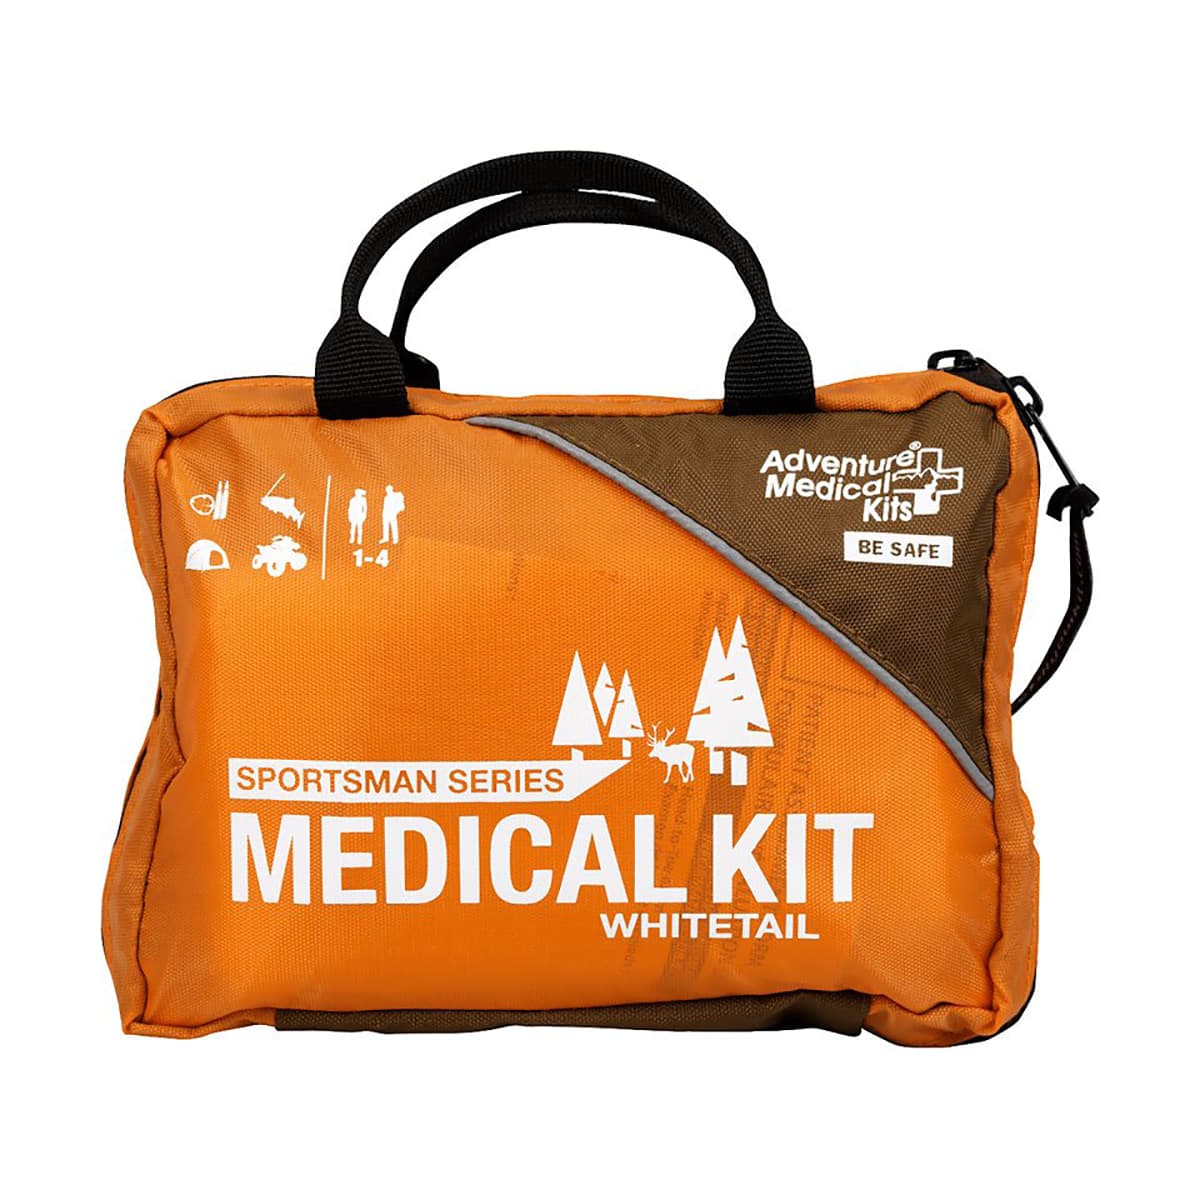 Adventure Medical Kits - Sportsman Whitetail First Aid Kit